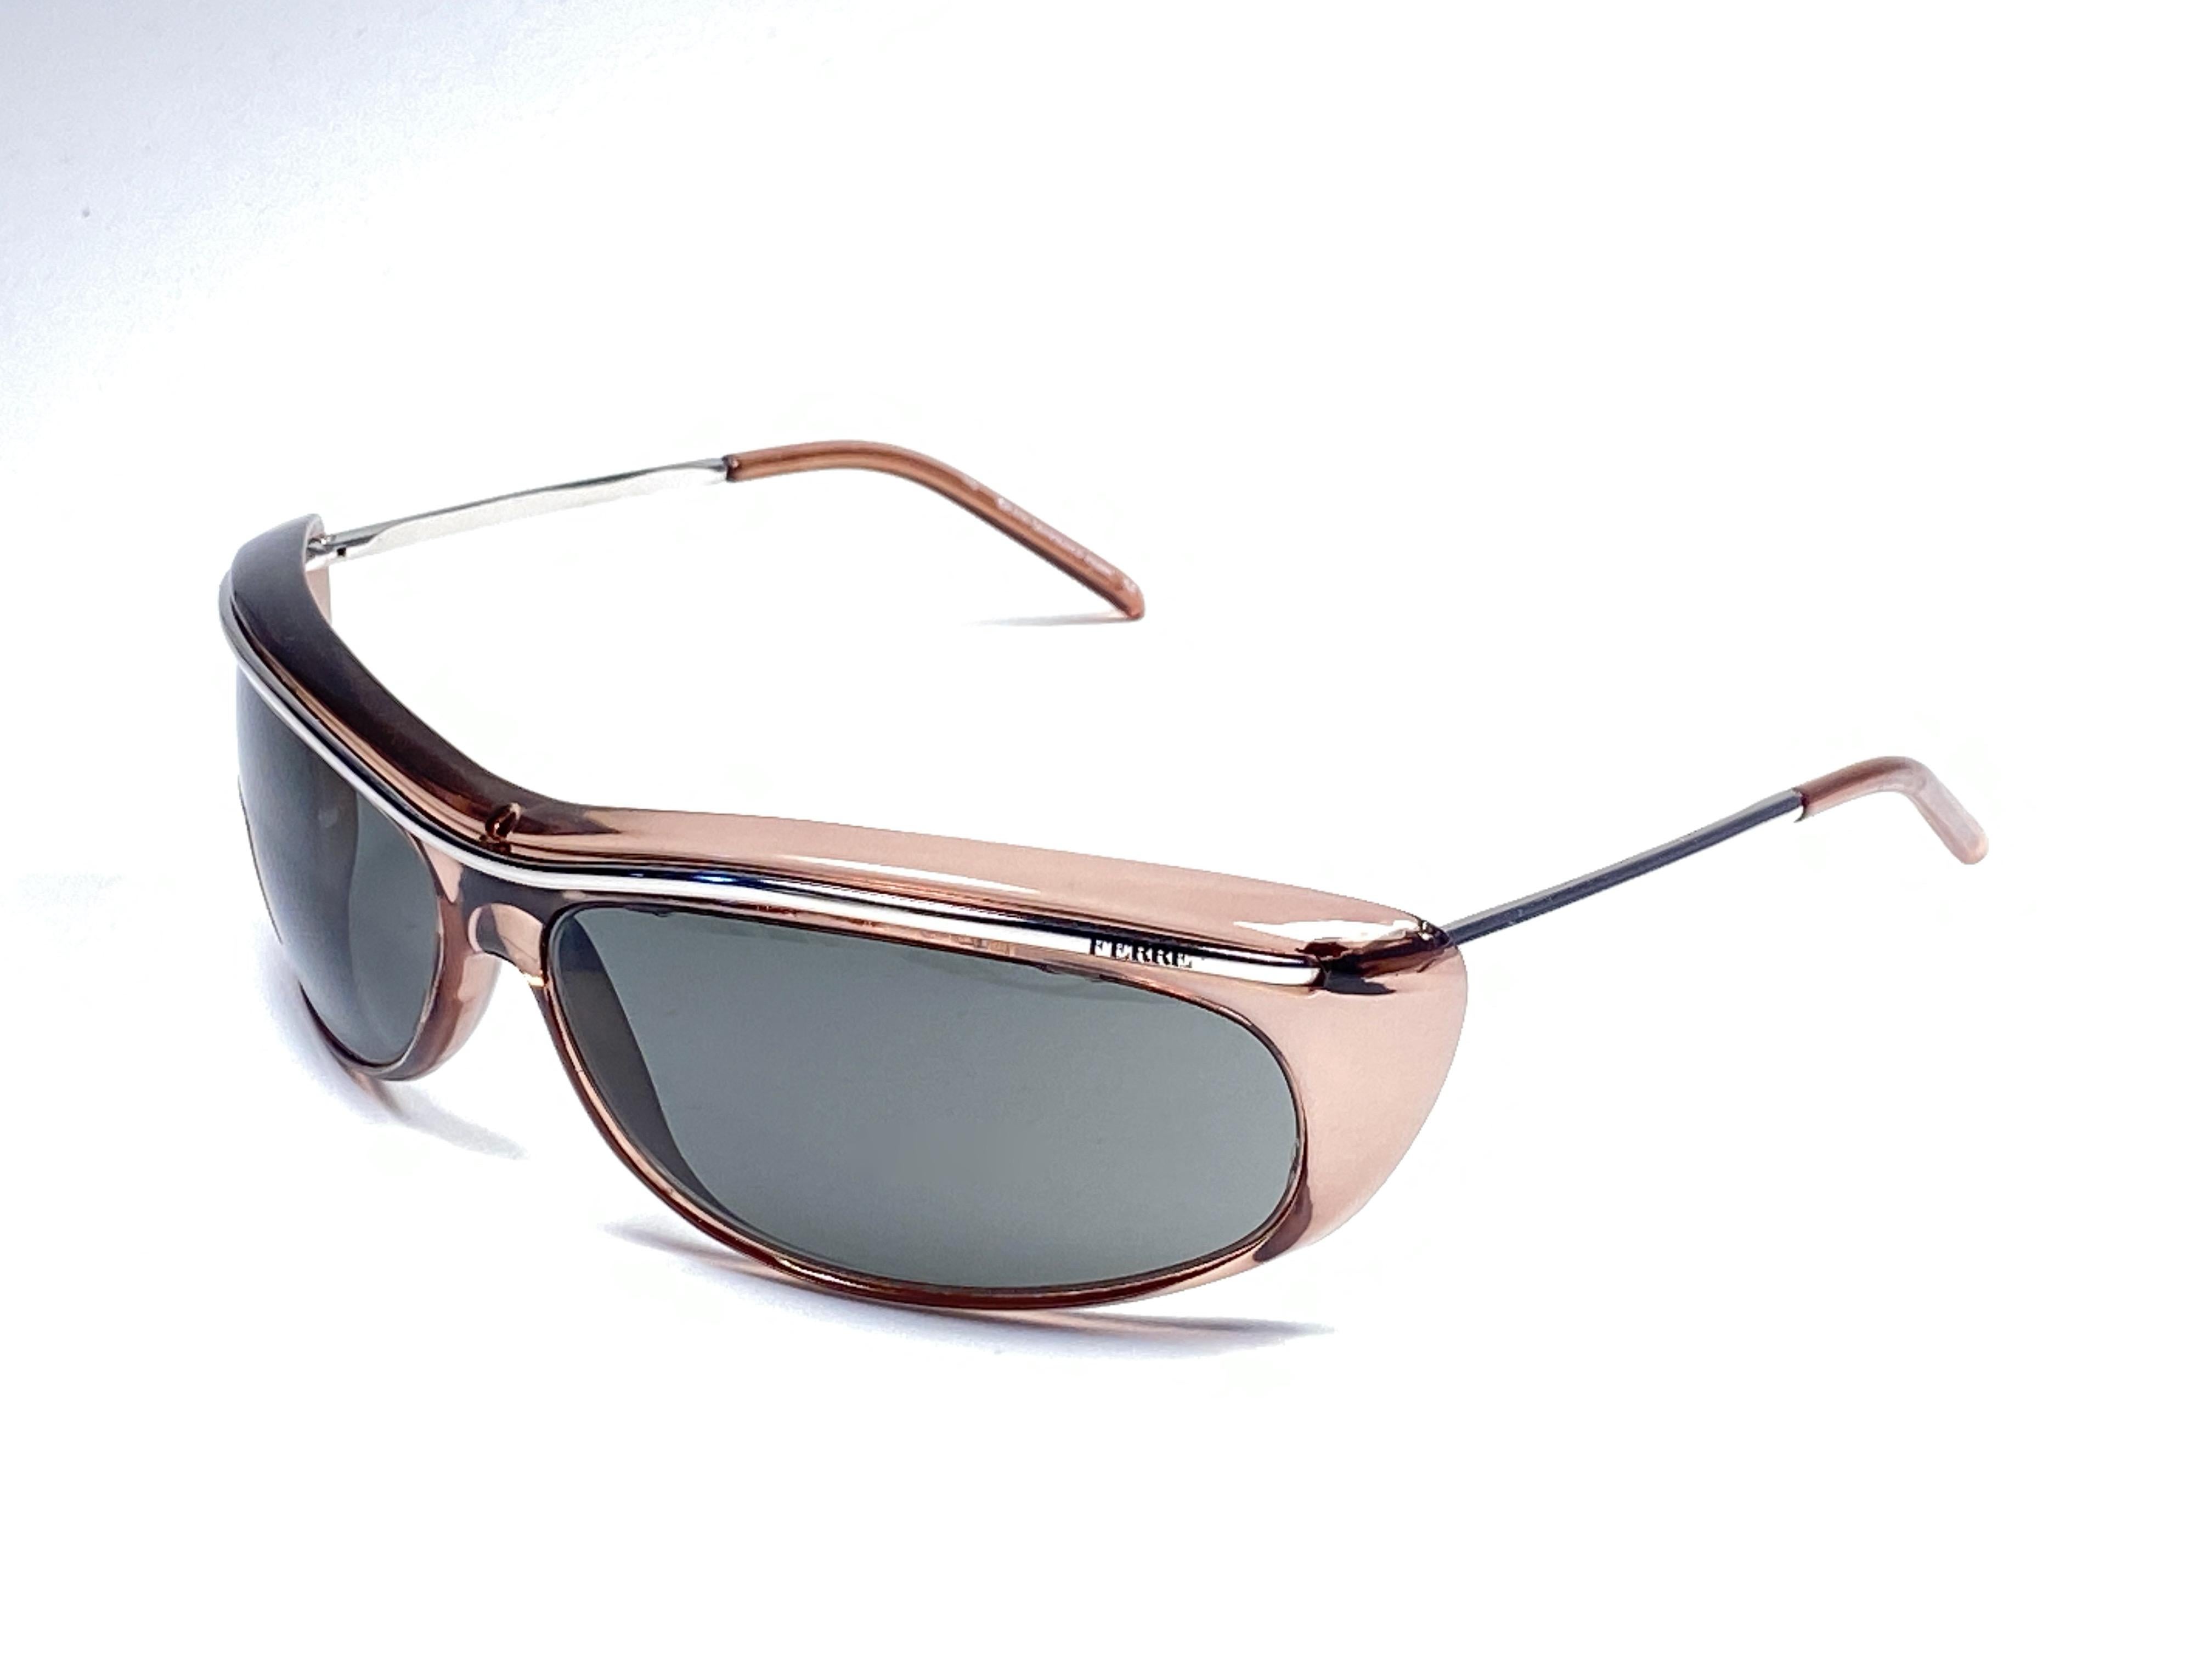 gianfranco ferre sunglasses vintage